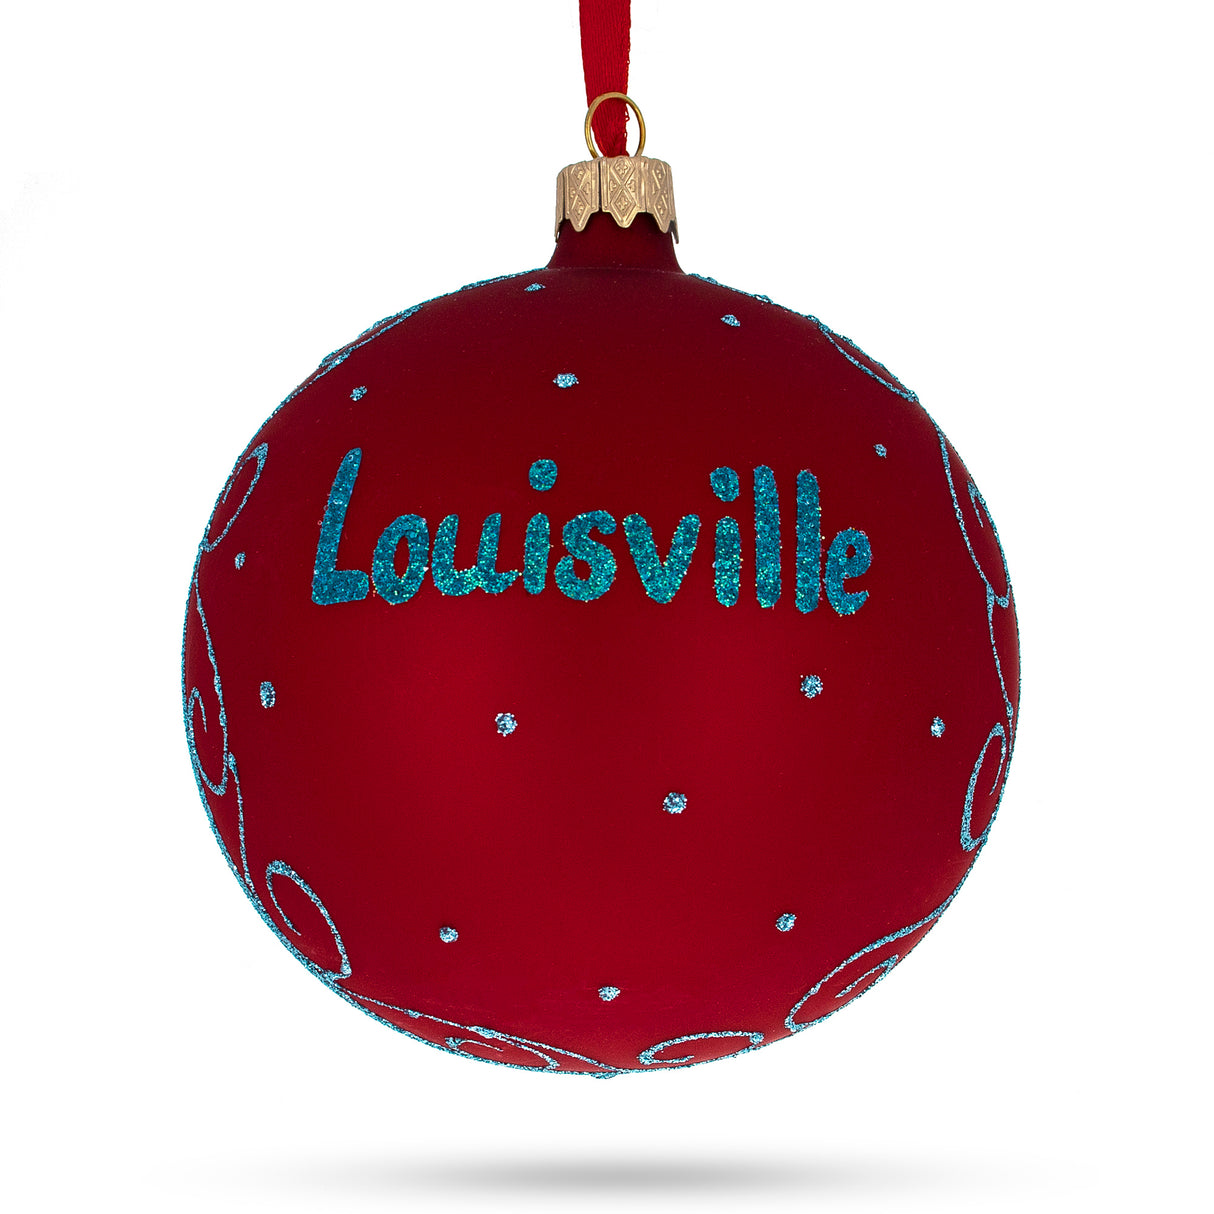 Buy Christmas Ornaments > Travel > North America > USA > Kentucky by BestPysanky Online Gift Ship